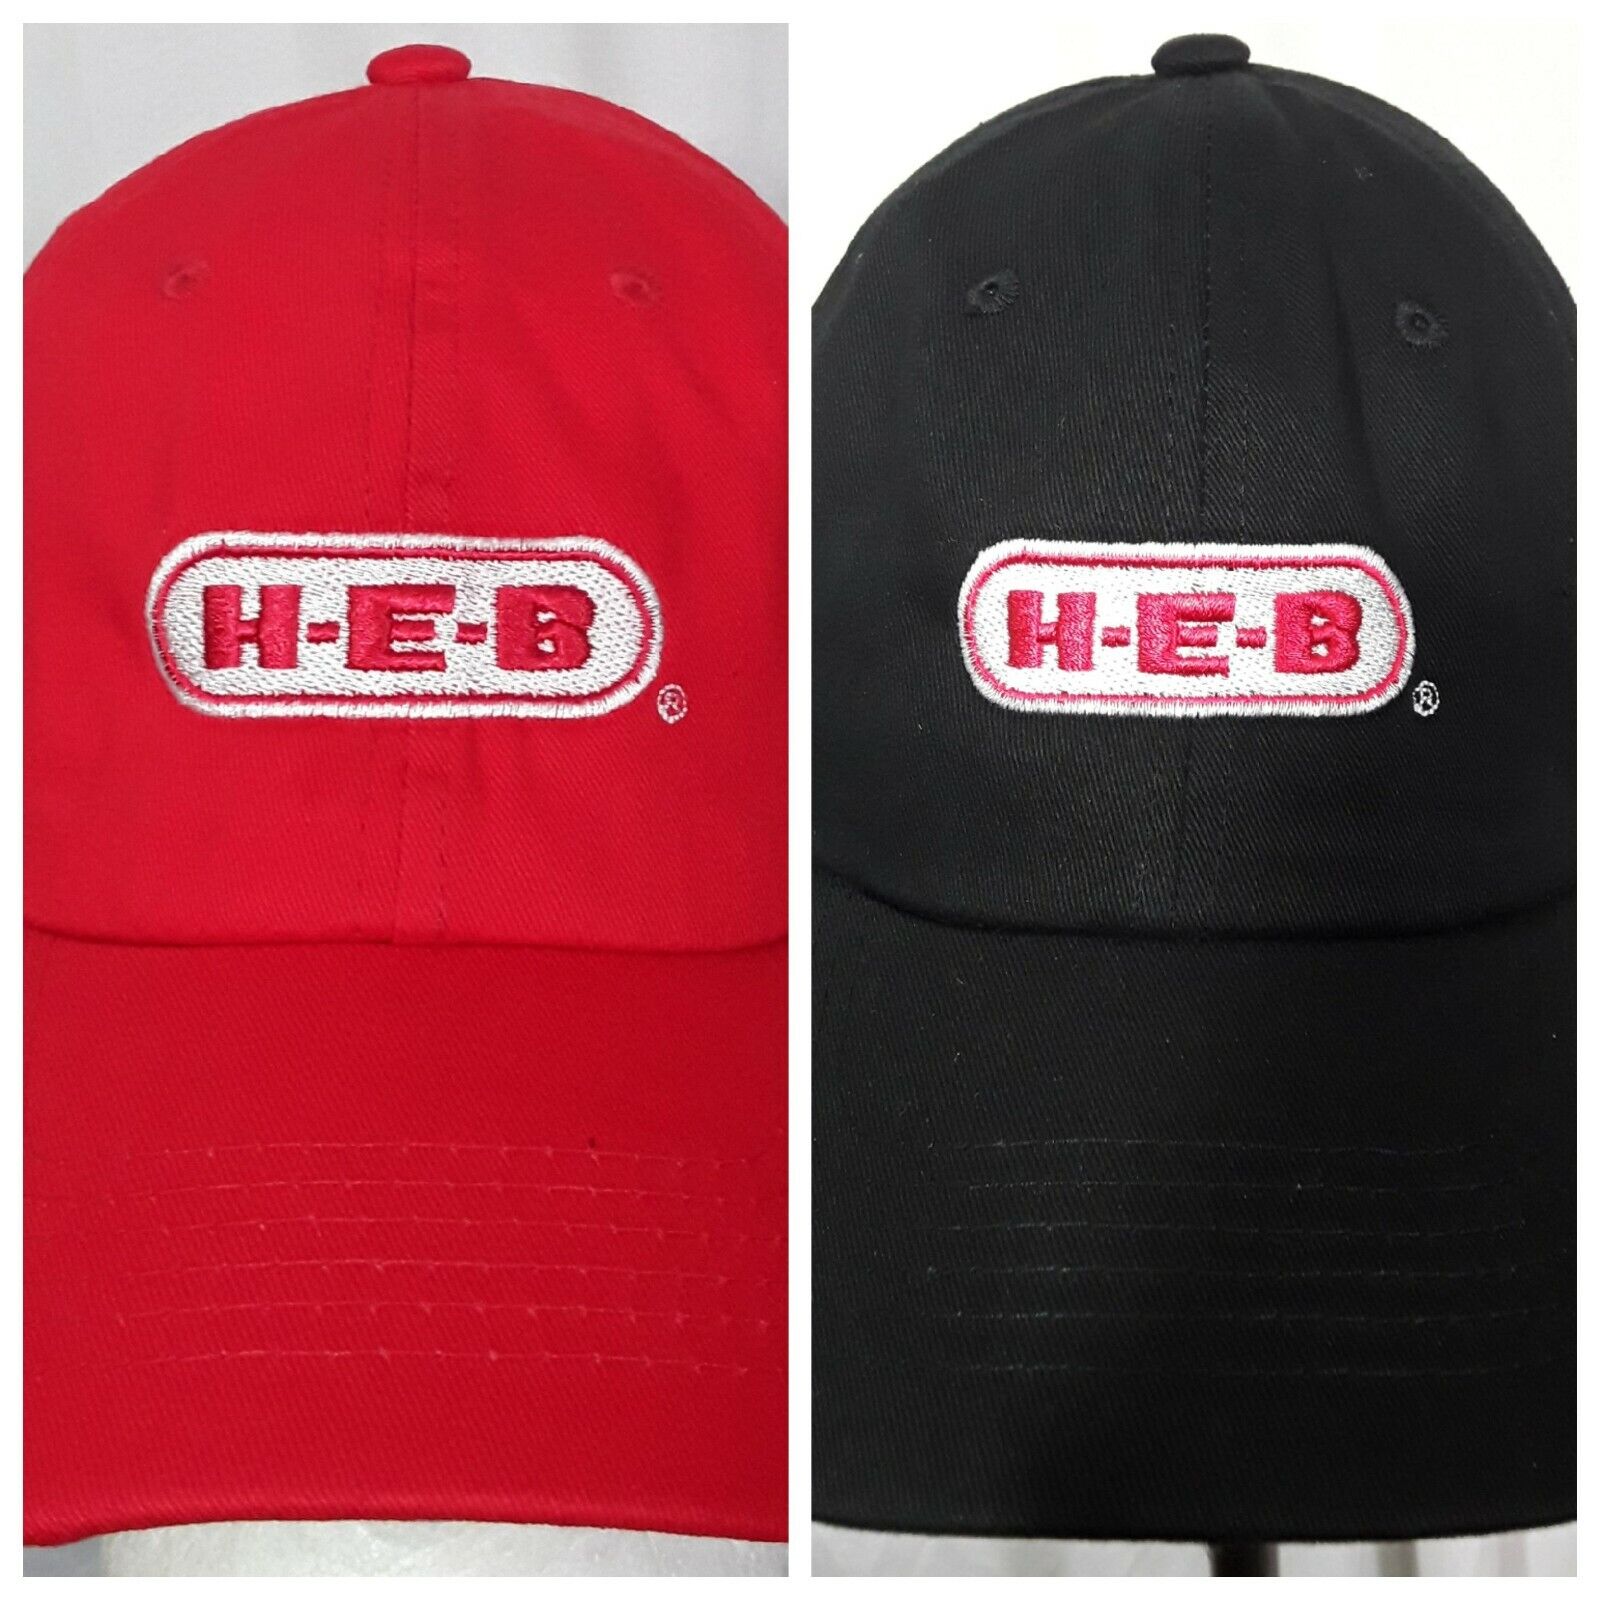 H-E-B LOGO STITCHED EMBROIDERED COTTON eBay | HAT ADJUSTABLE BASEBALL CAP